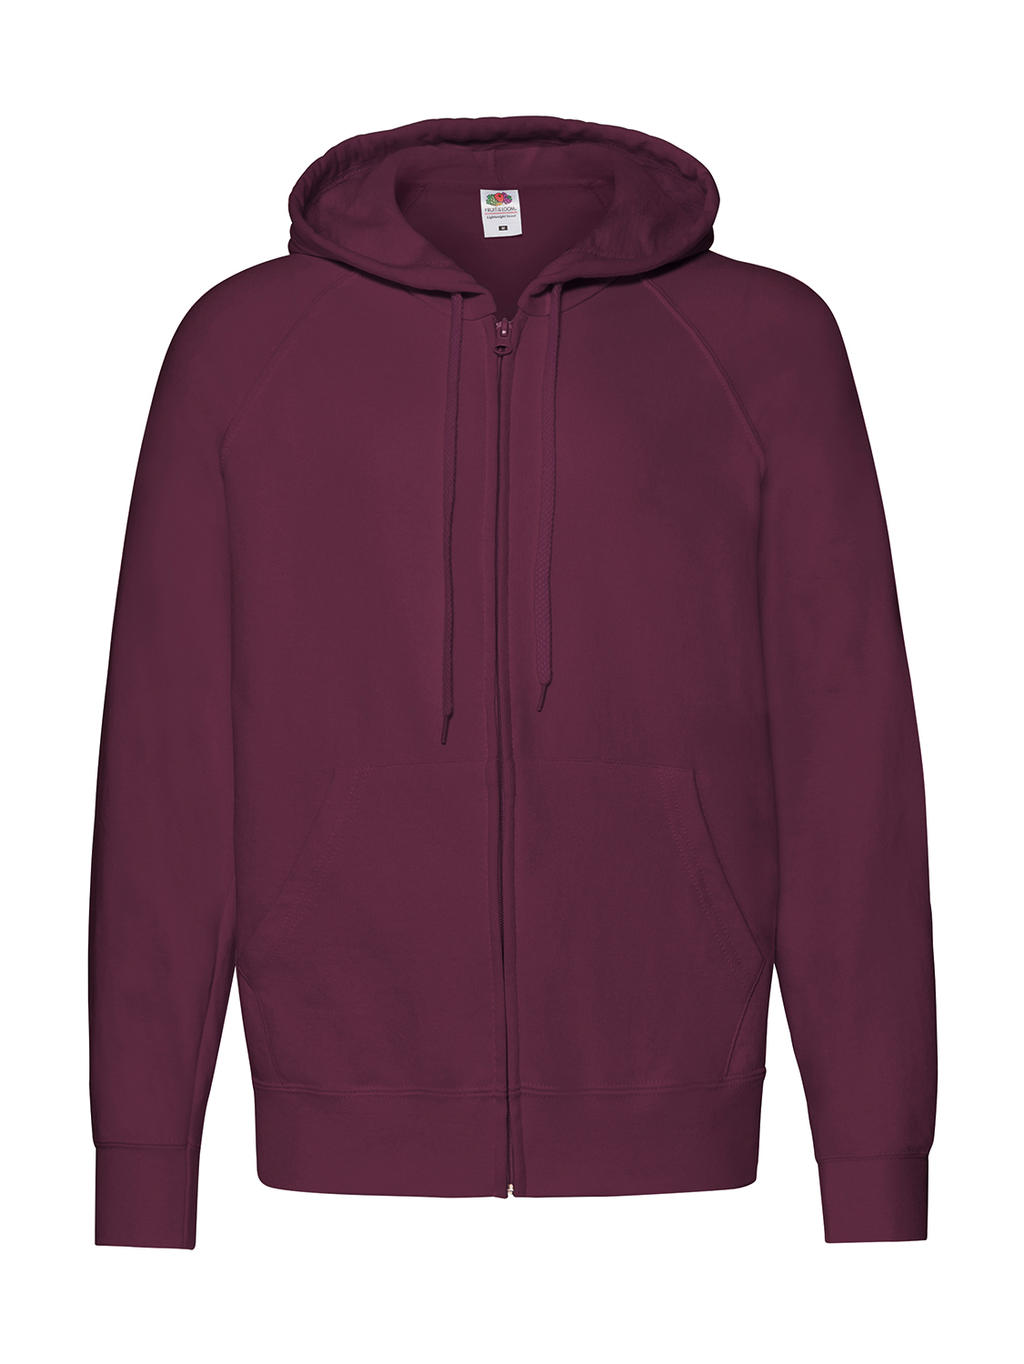  Lightweight Hooded Sweat Jacket in Farbe Burgundy